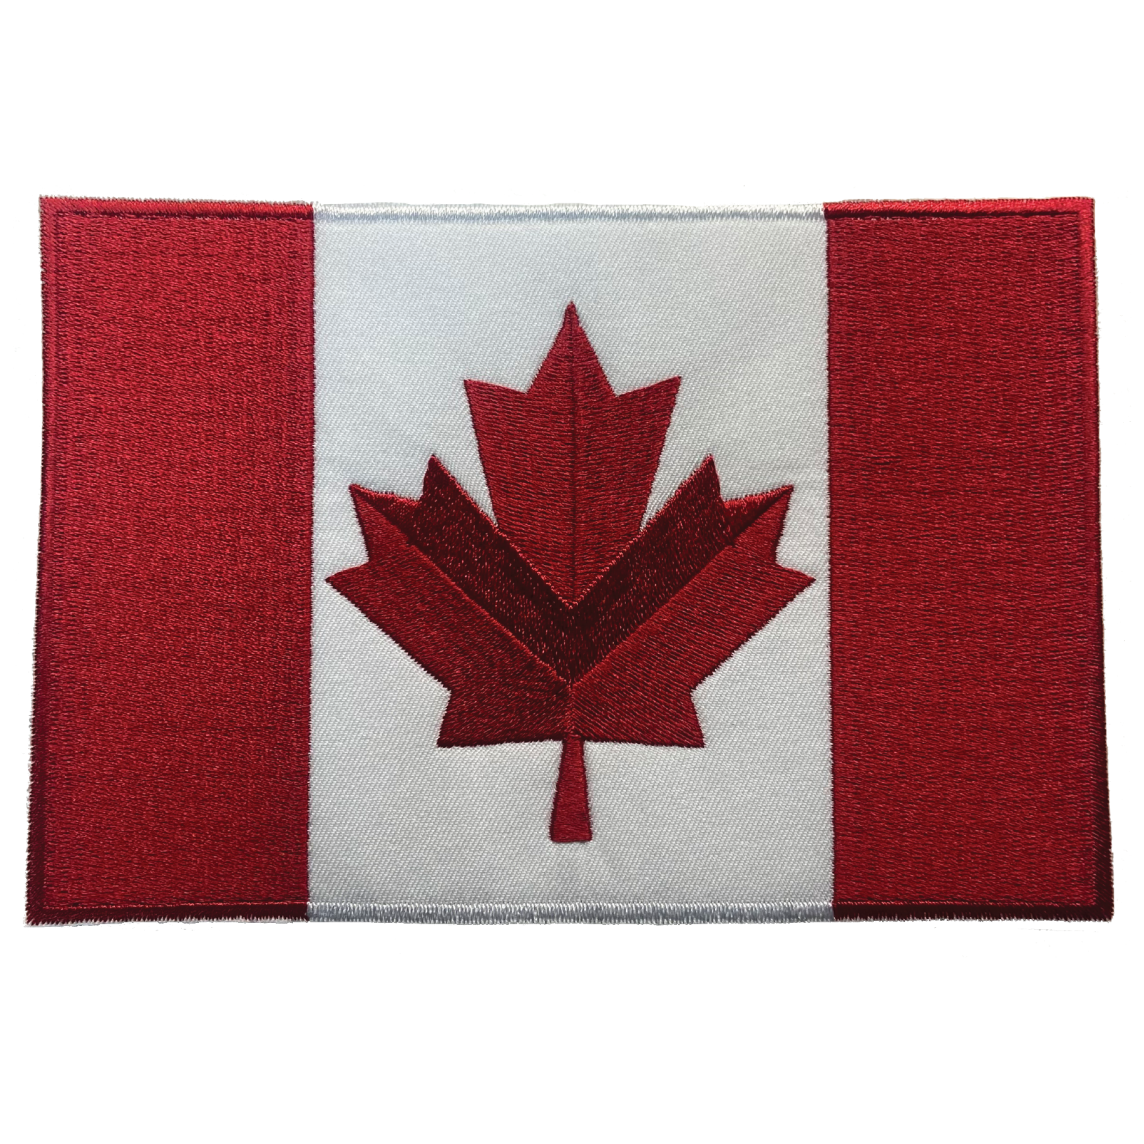 Canada Flag Patch 4 x 6 inch